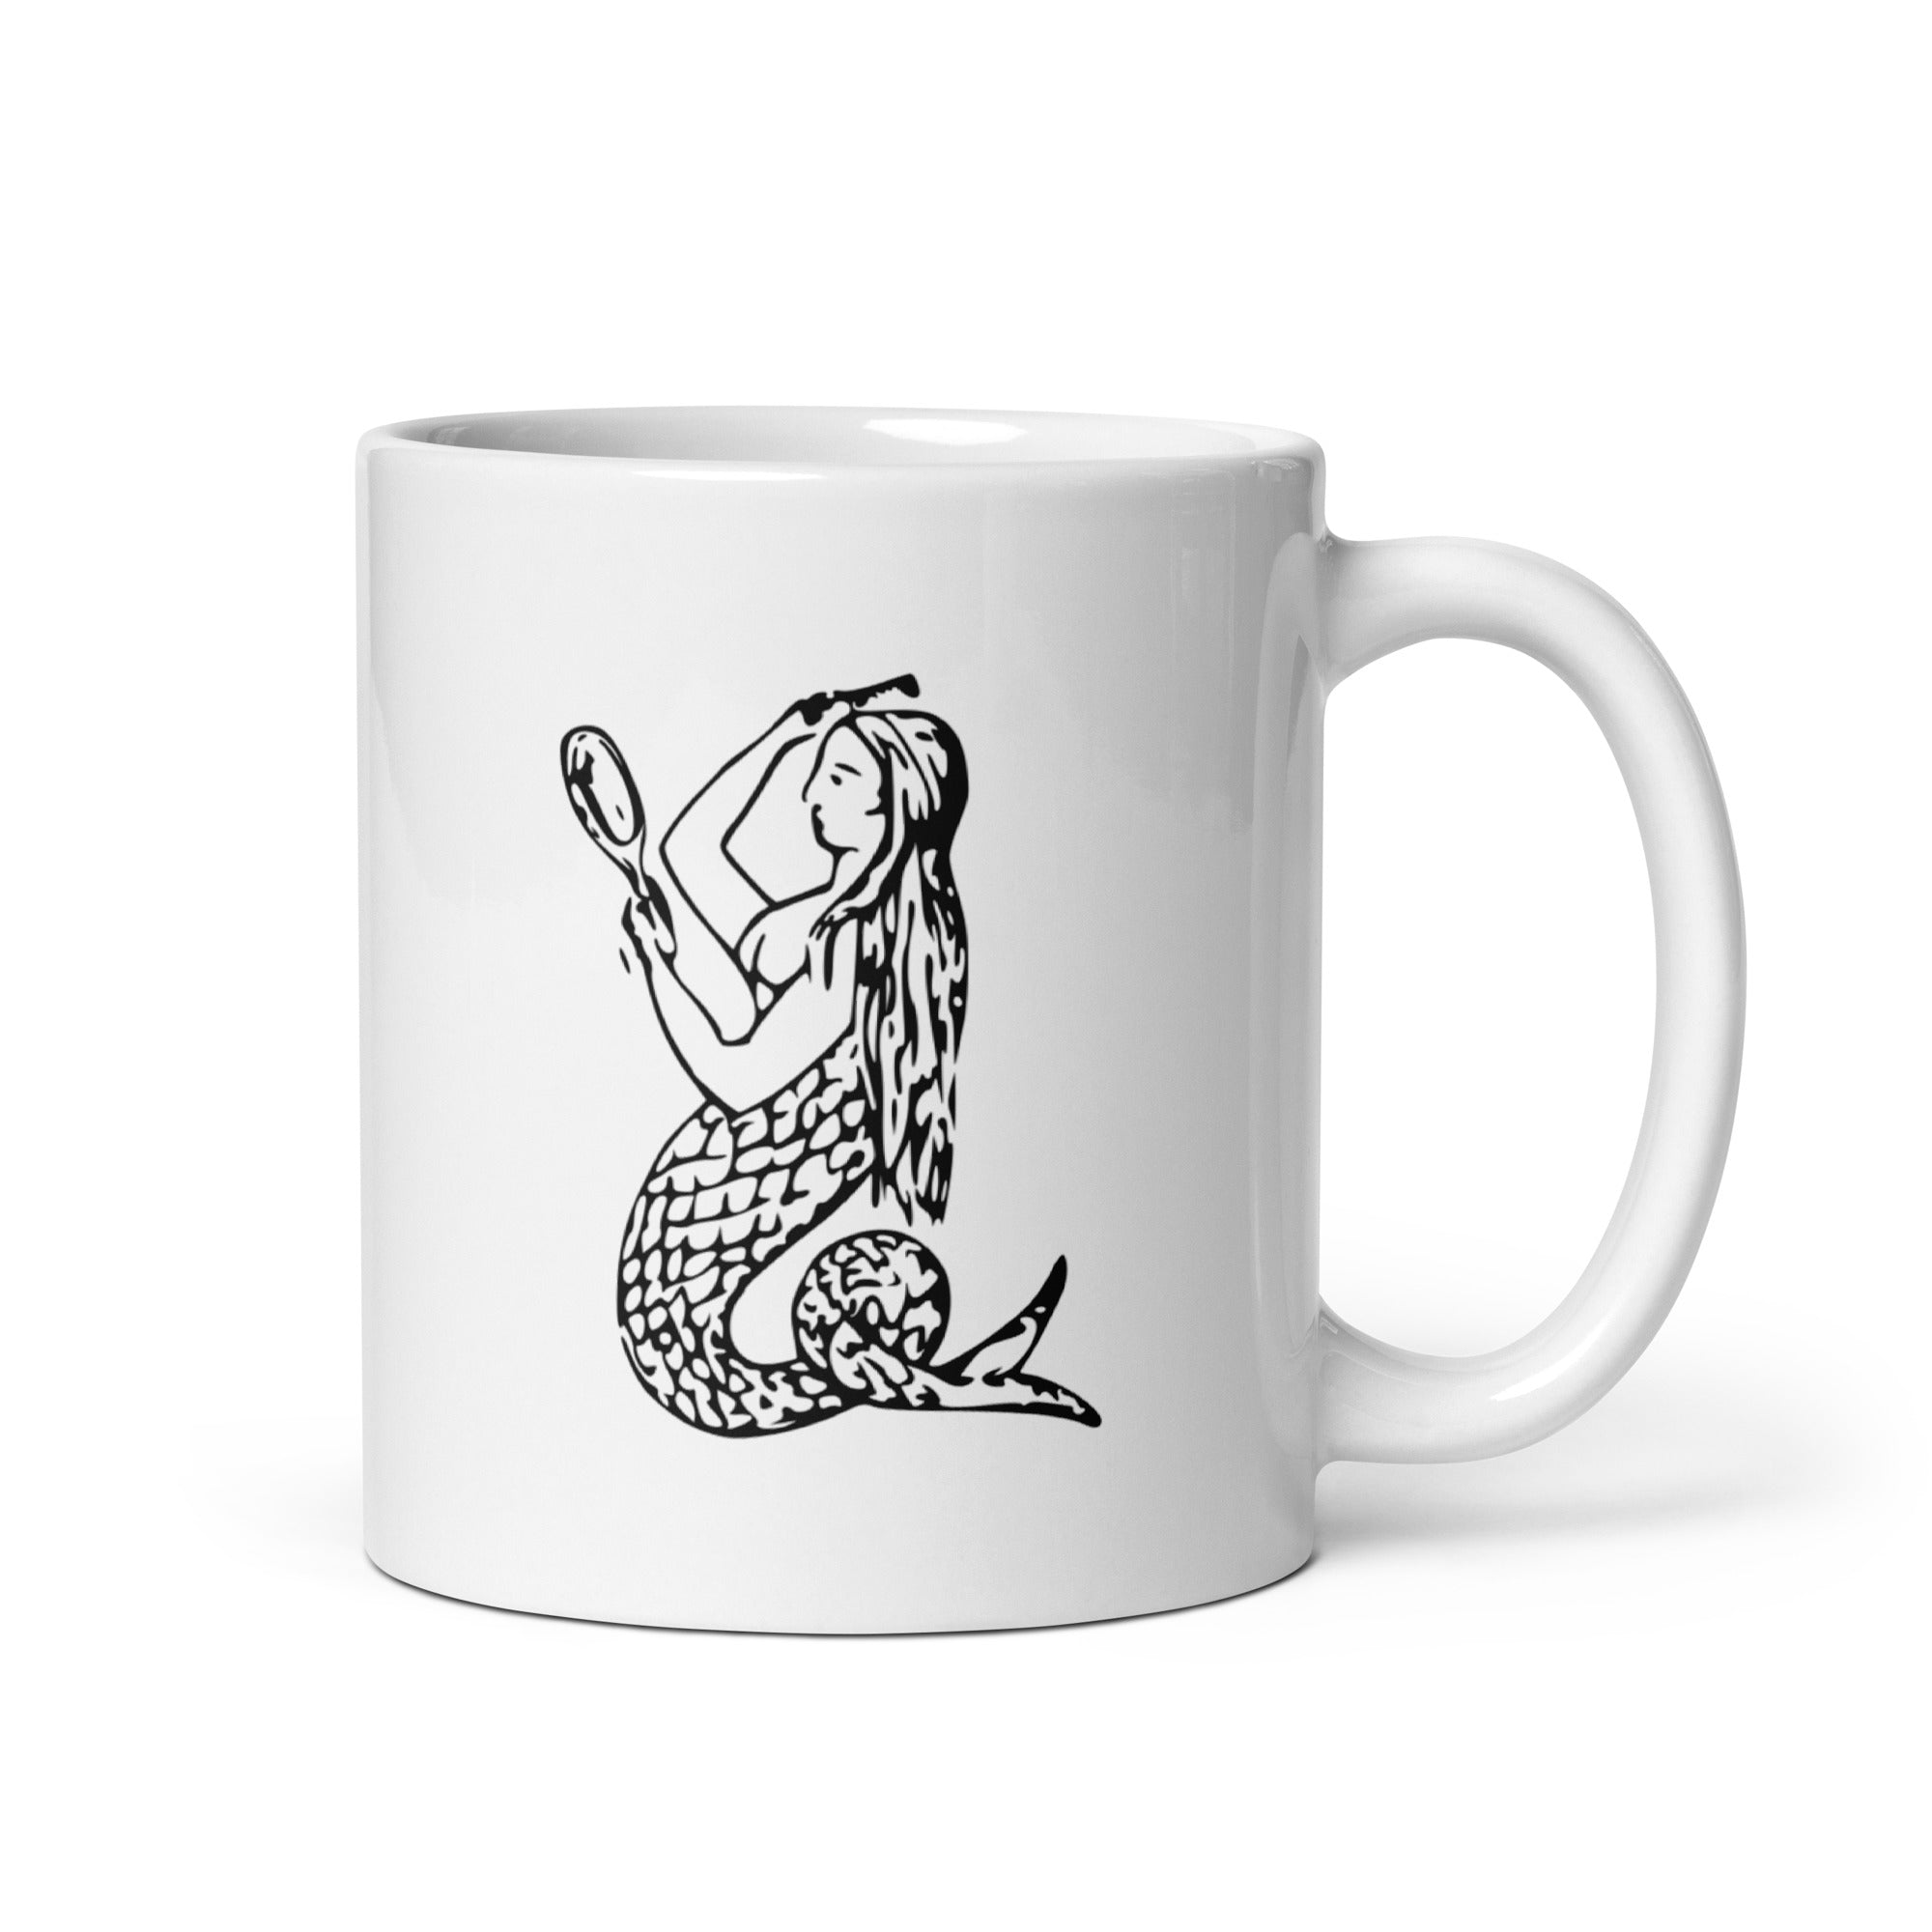 Mermaid mug